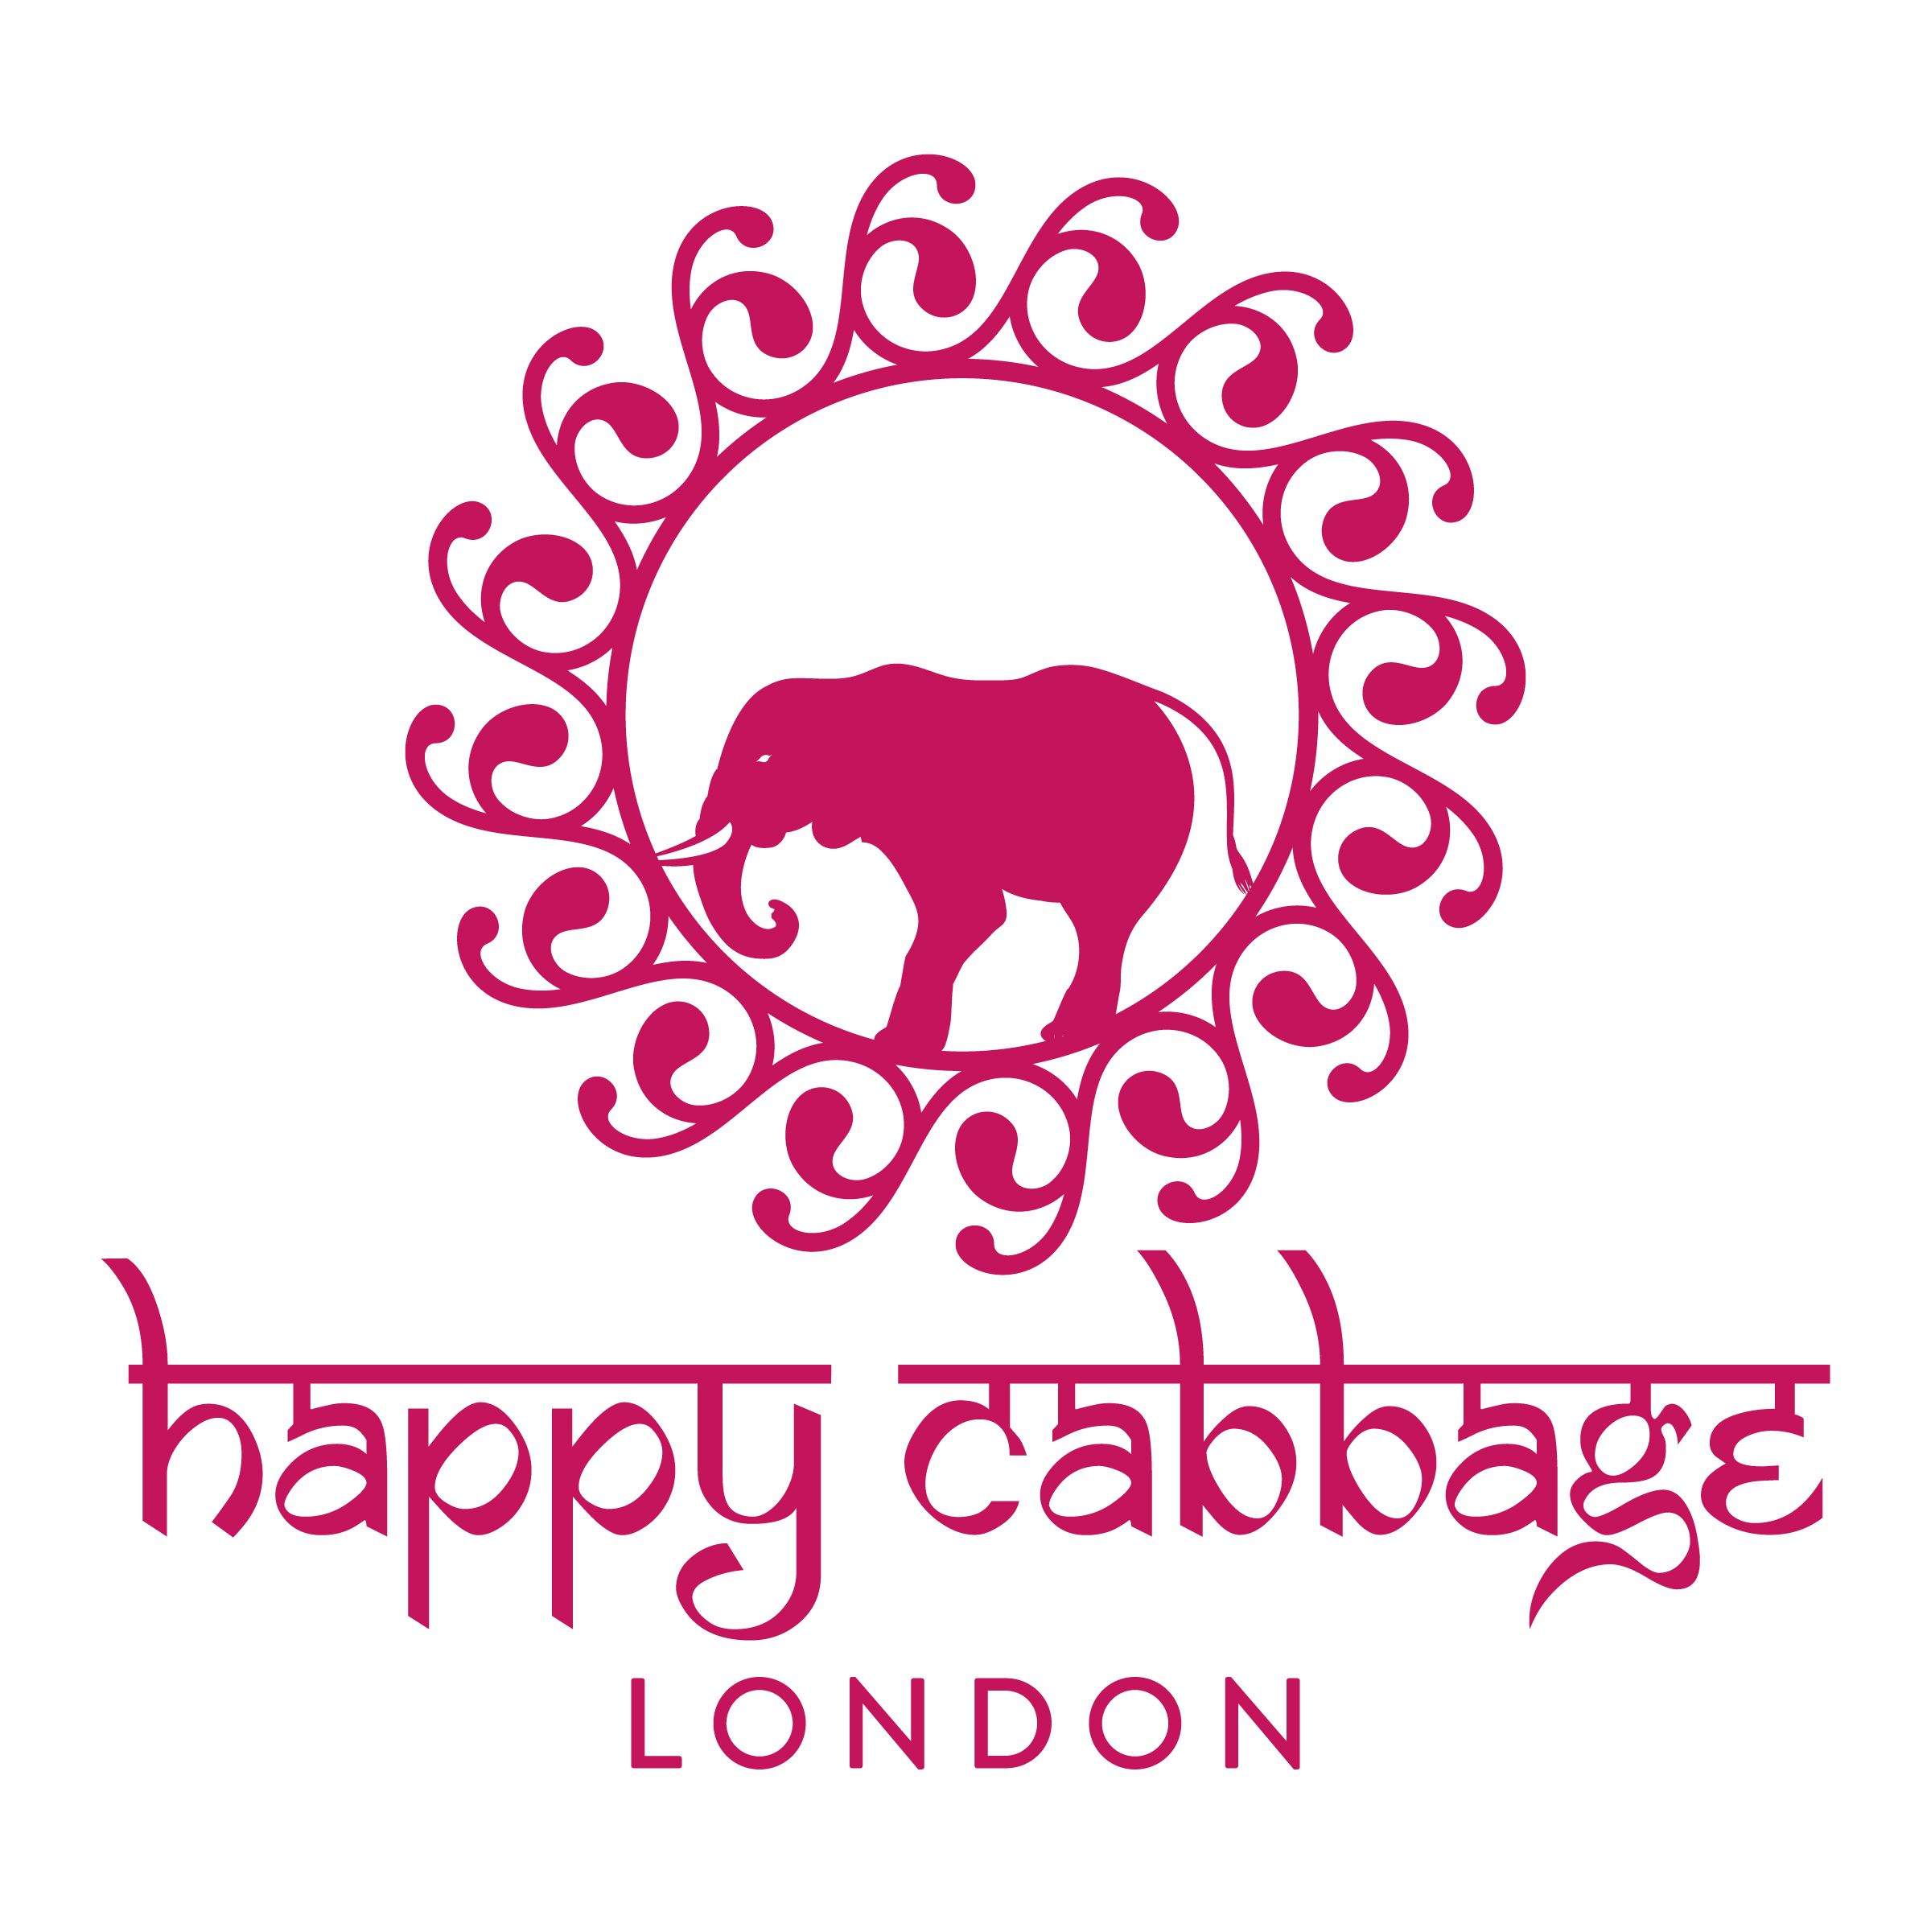 Happy Cabbage London